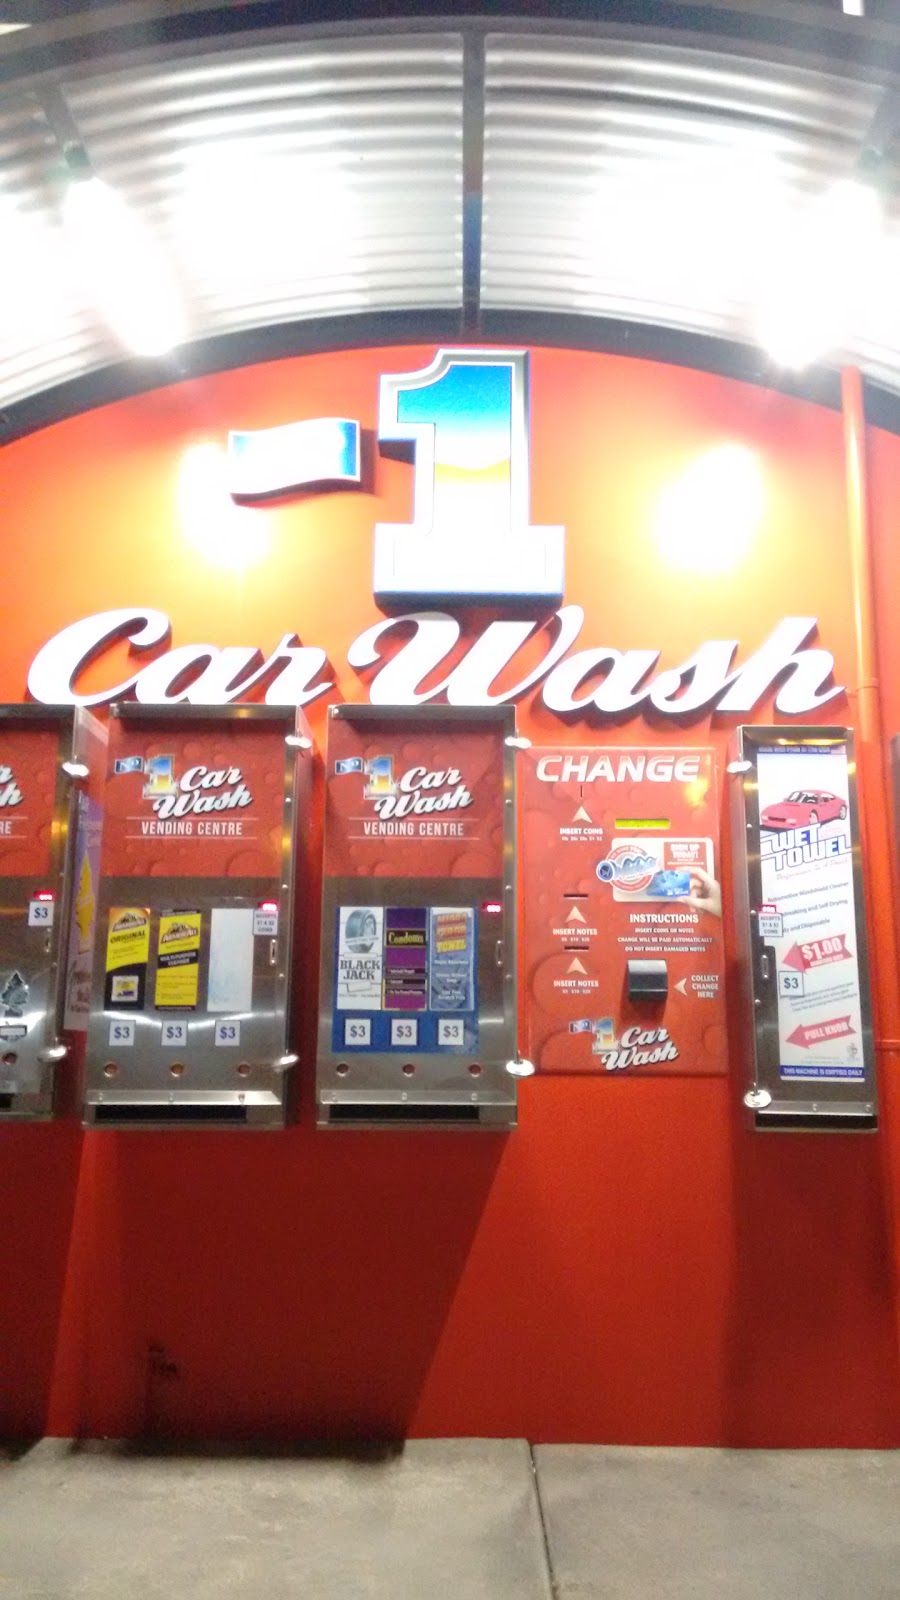 No 1 Car Wash | car wash | 321-325 York St, Sale VIC 3850, Australia | 0419940235 OR +61 419 940 235